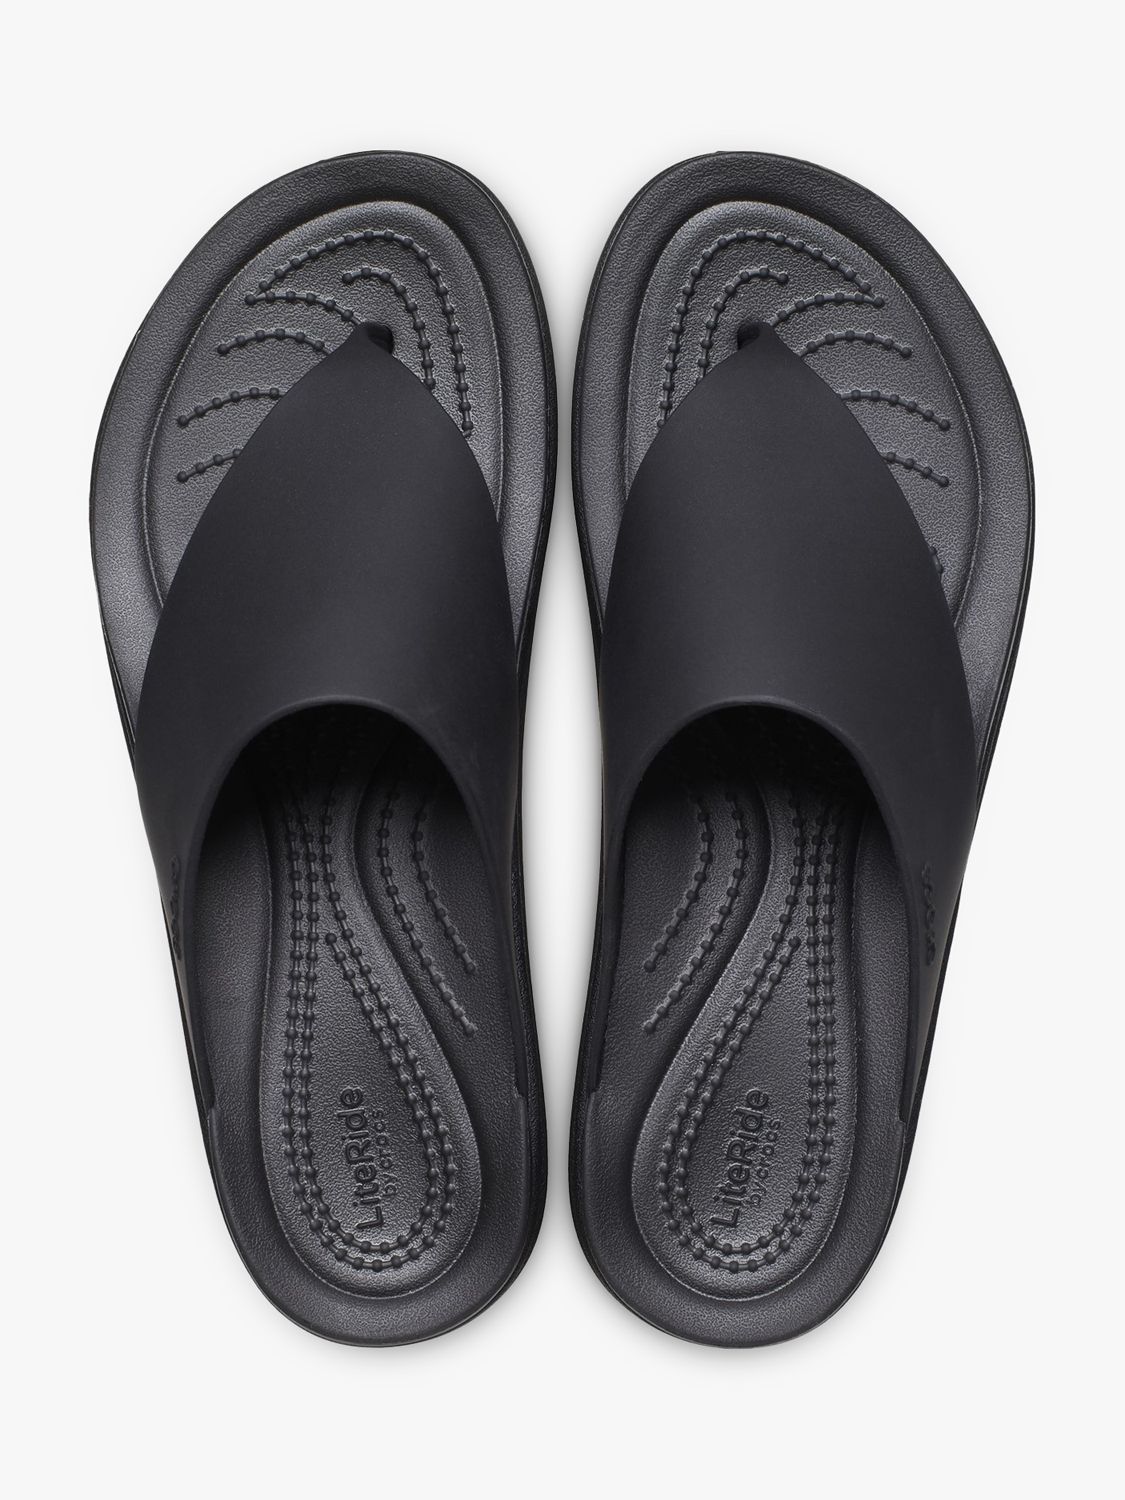 Crocs Brooklyn Flip-Flops, Black at John Lewis & Partners